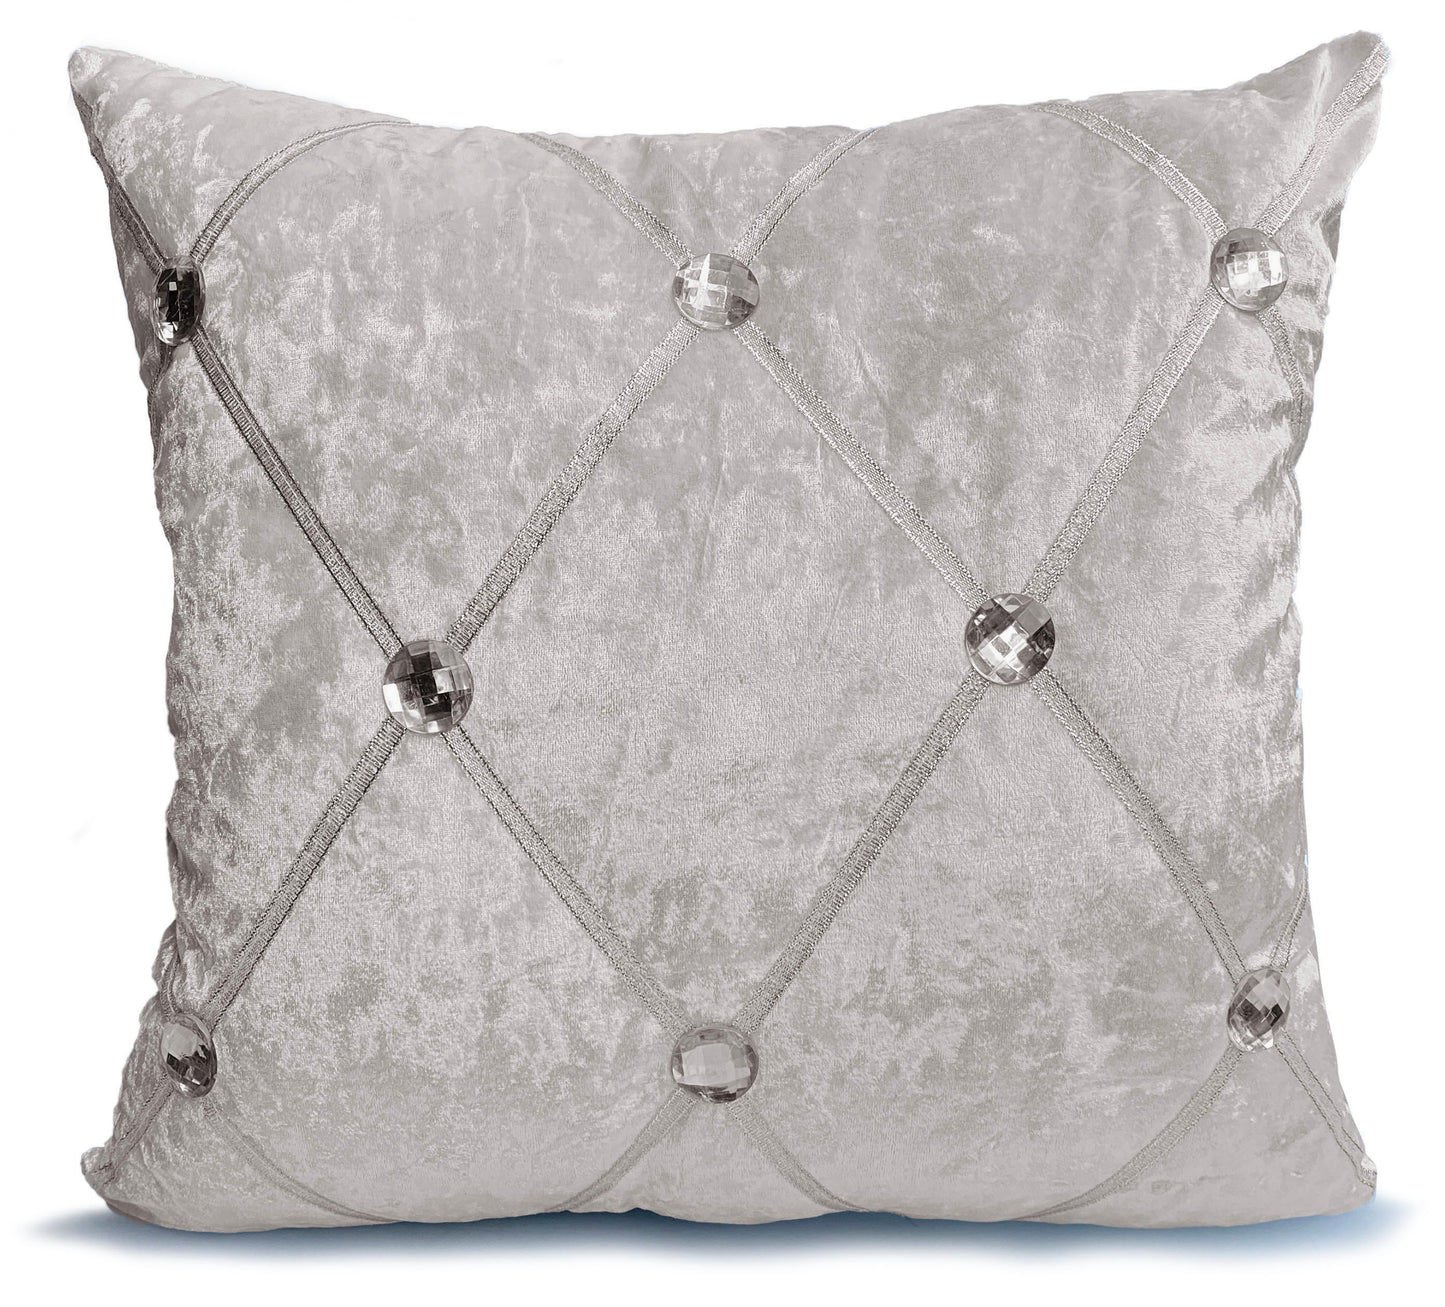 Large Crush Velvet Diamante Chesterfield Cushions or Covers Cream